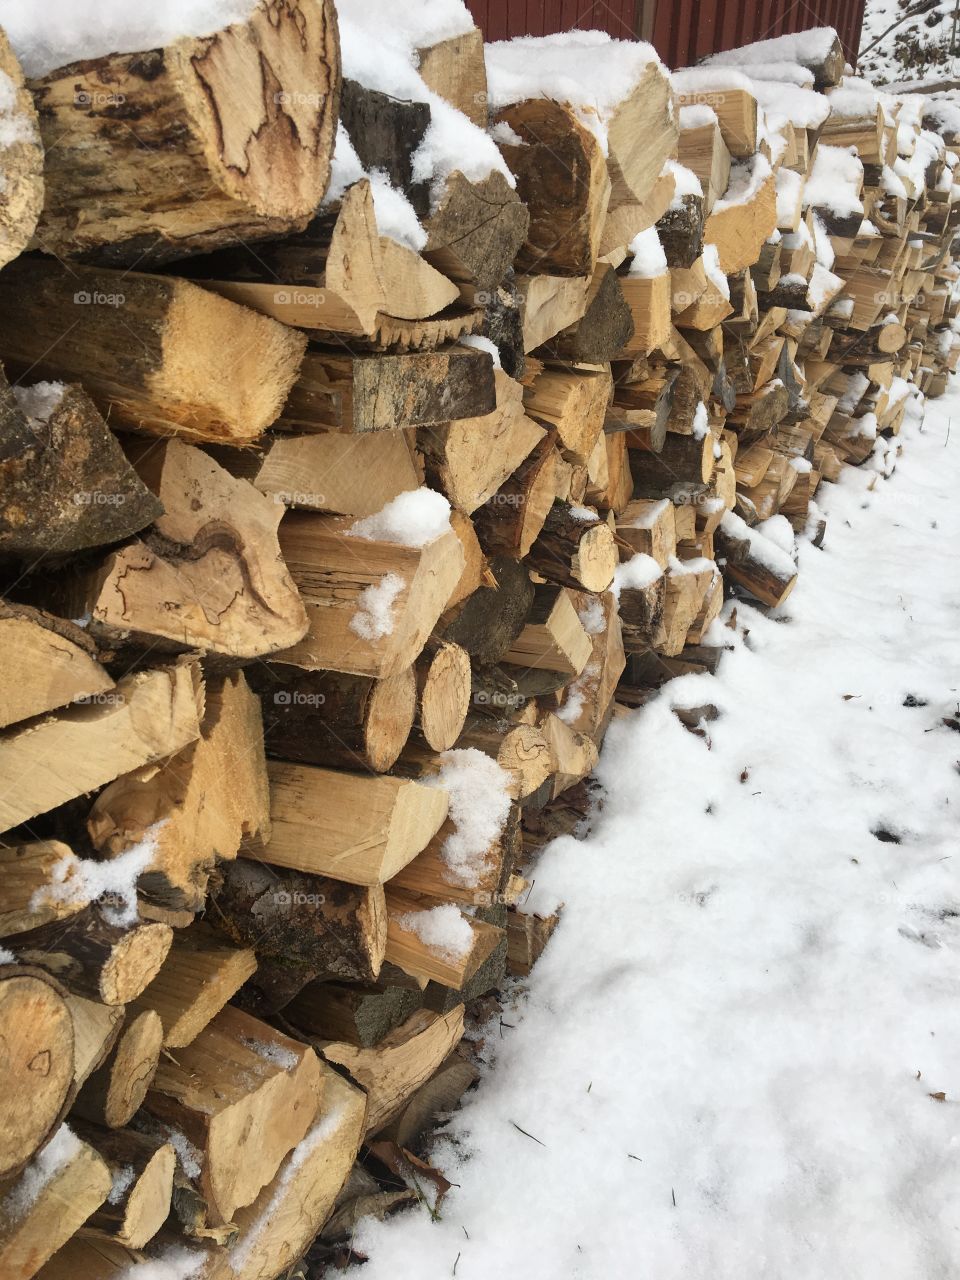 Winter wood pile